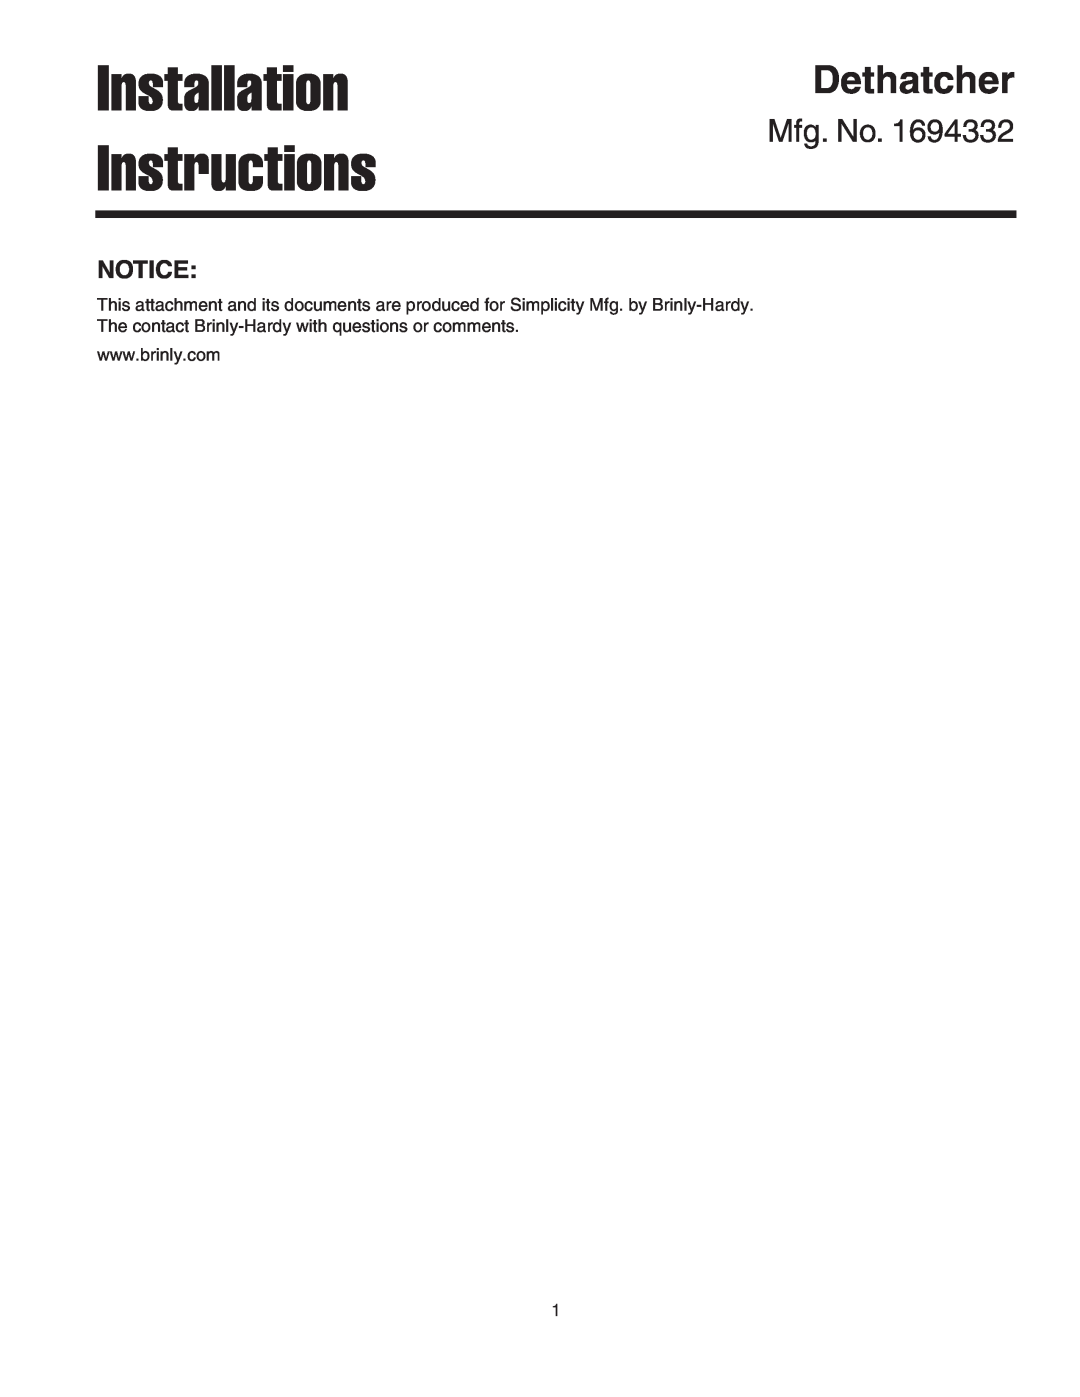 Brinly-Hardy 1694332 installation instructions Installation Instructions, Dethatcher, Mfg. No 